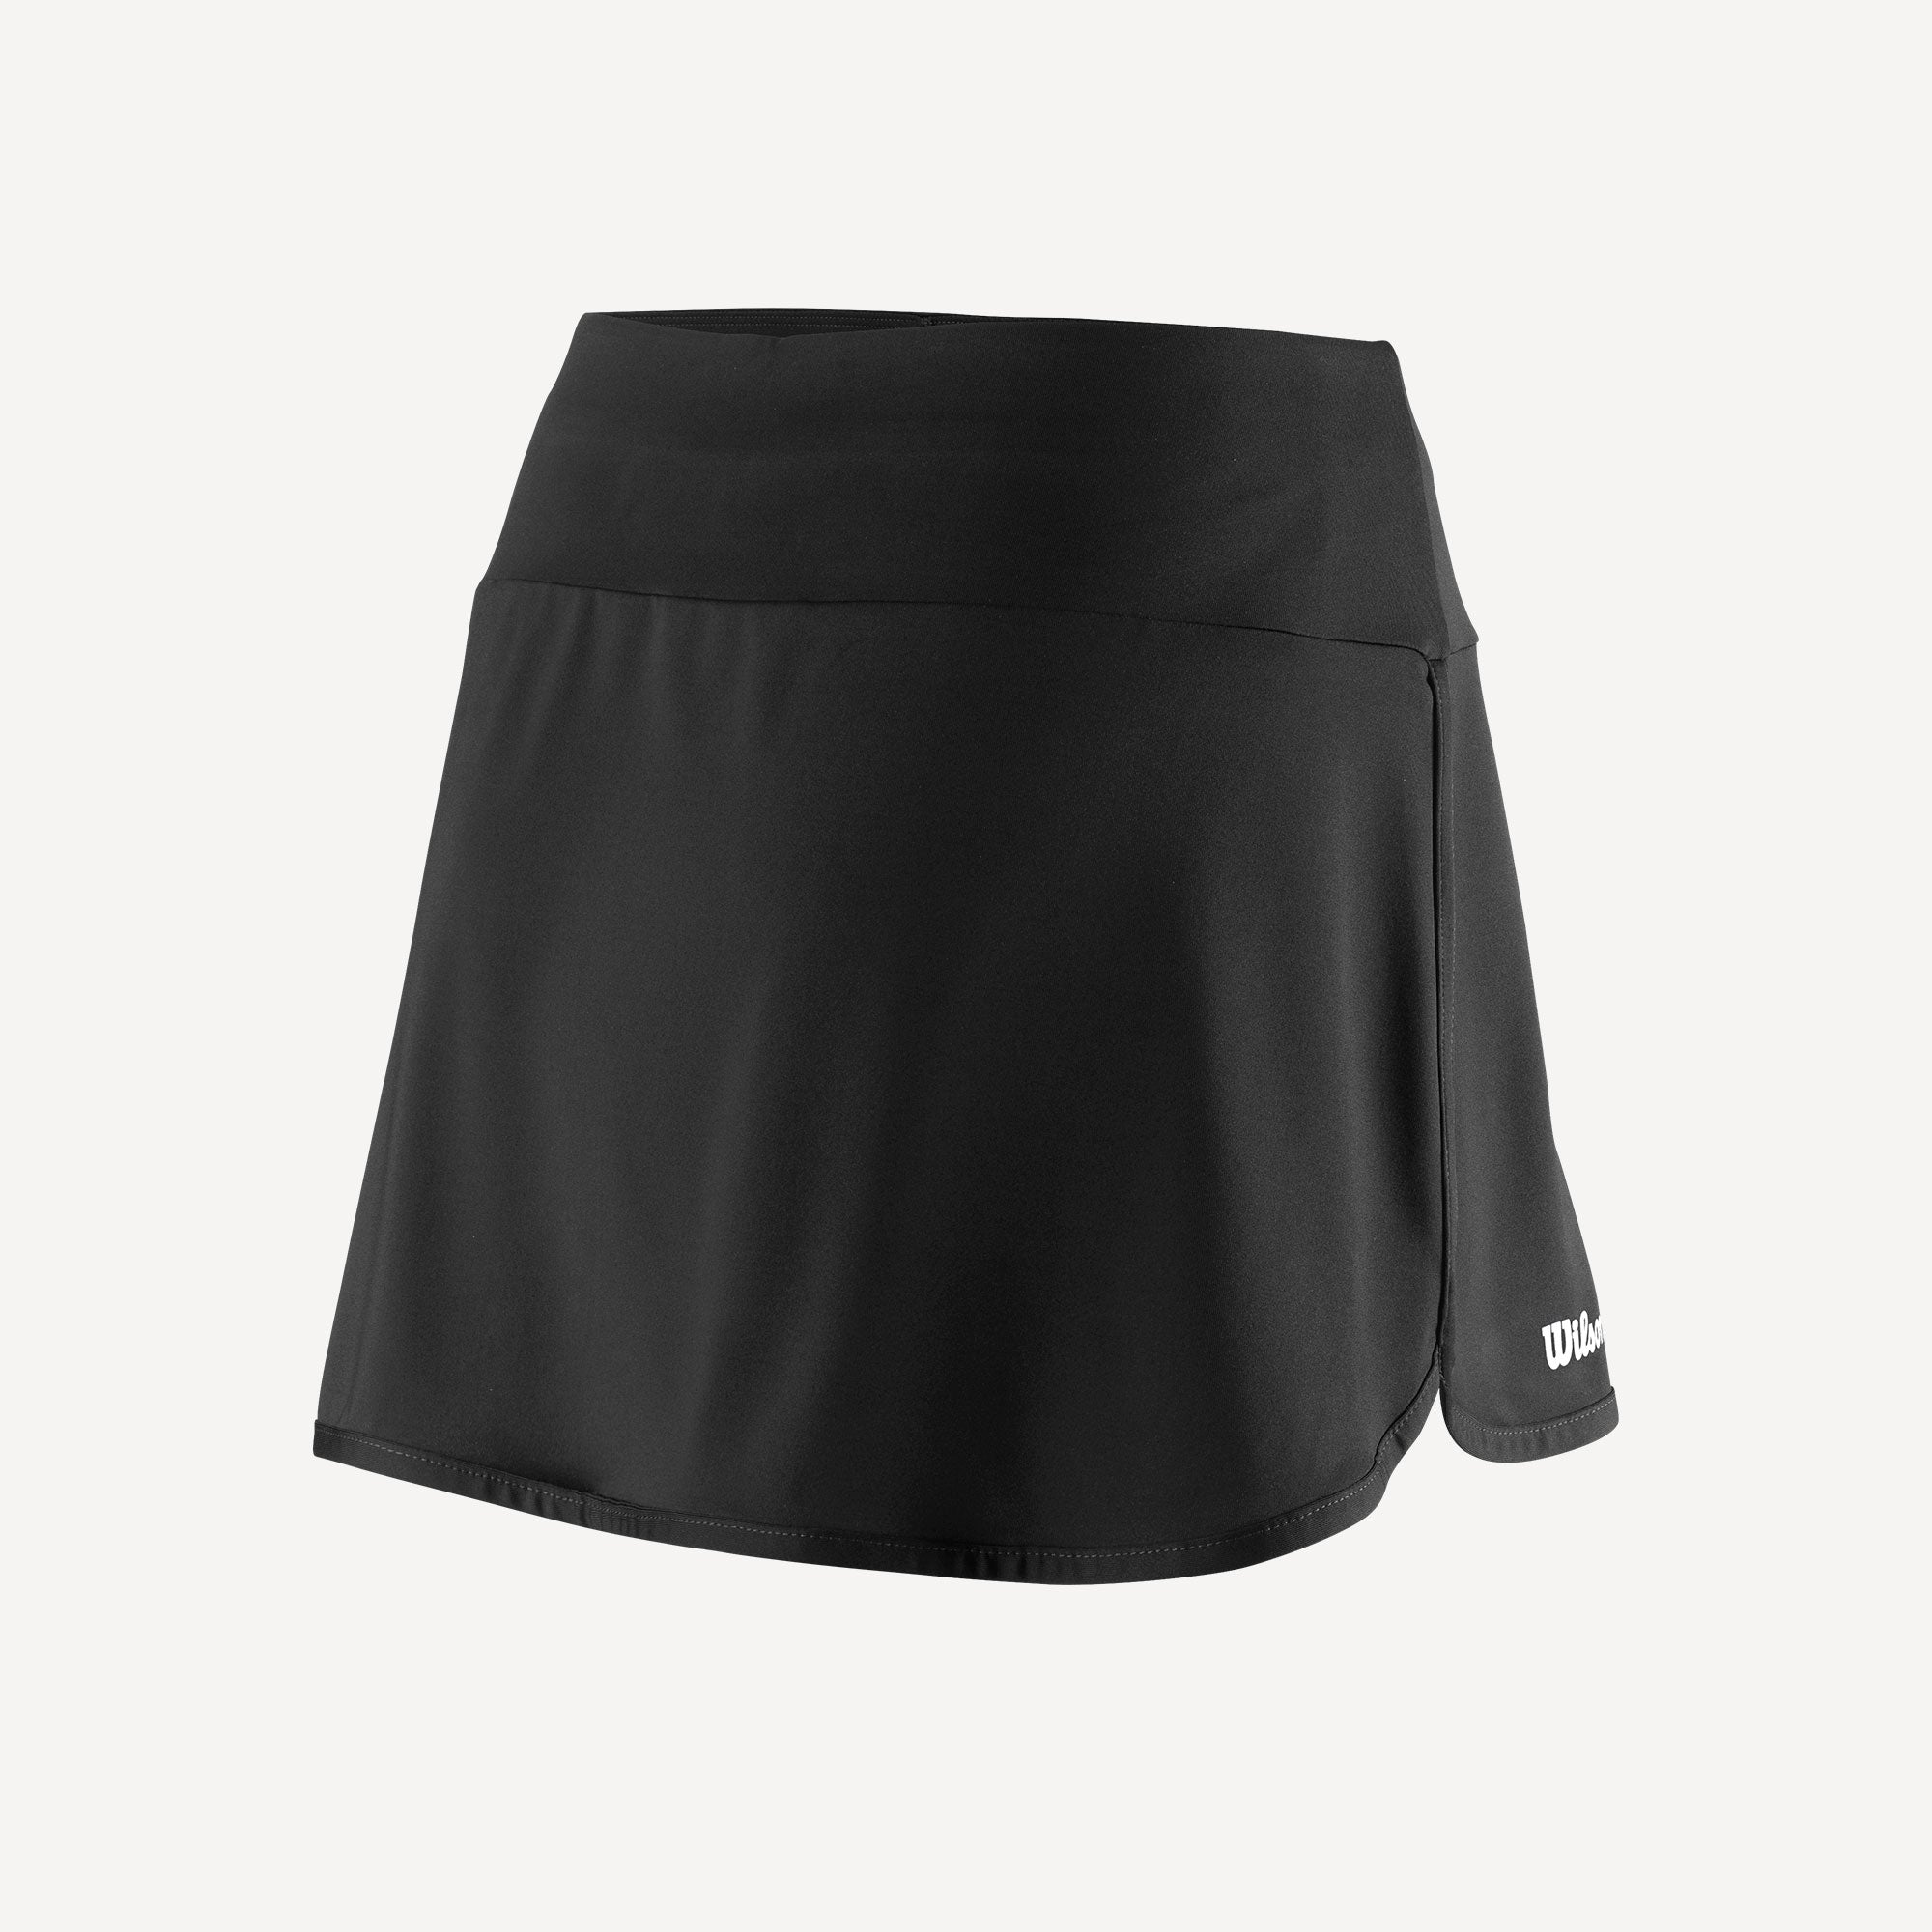 Wilson Team 2 Women's 12.5-Inch Tennis Skirt Black (2)